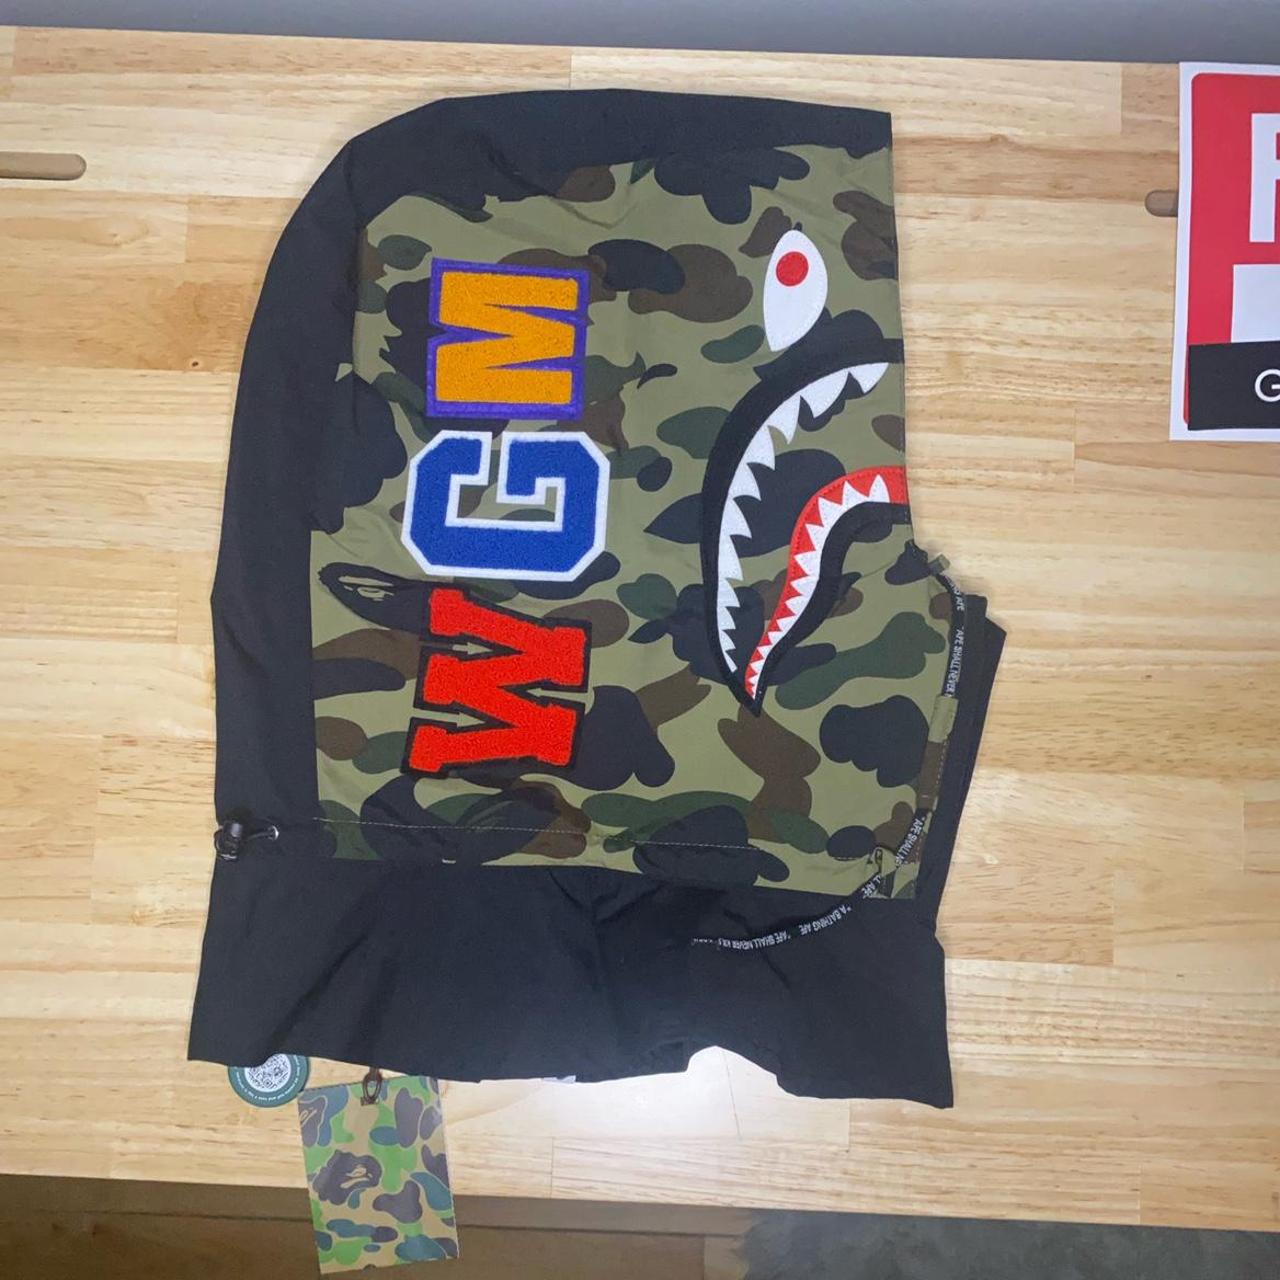 BAPE 1st Camo Shark Hoodie Mask Retail $220